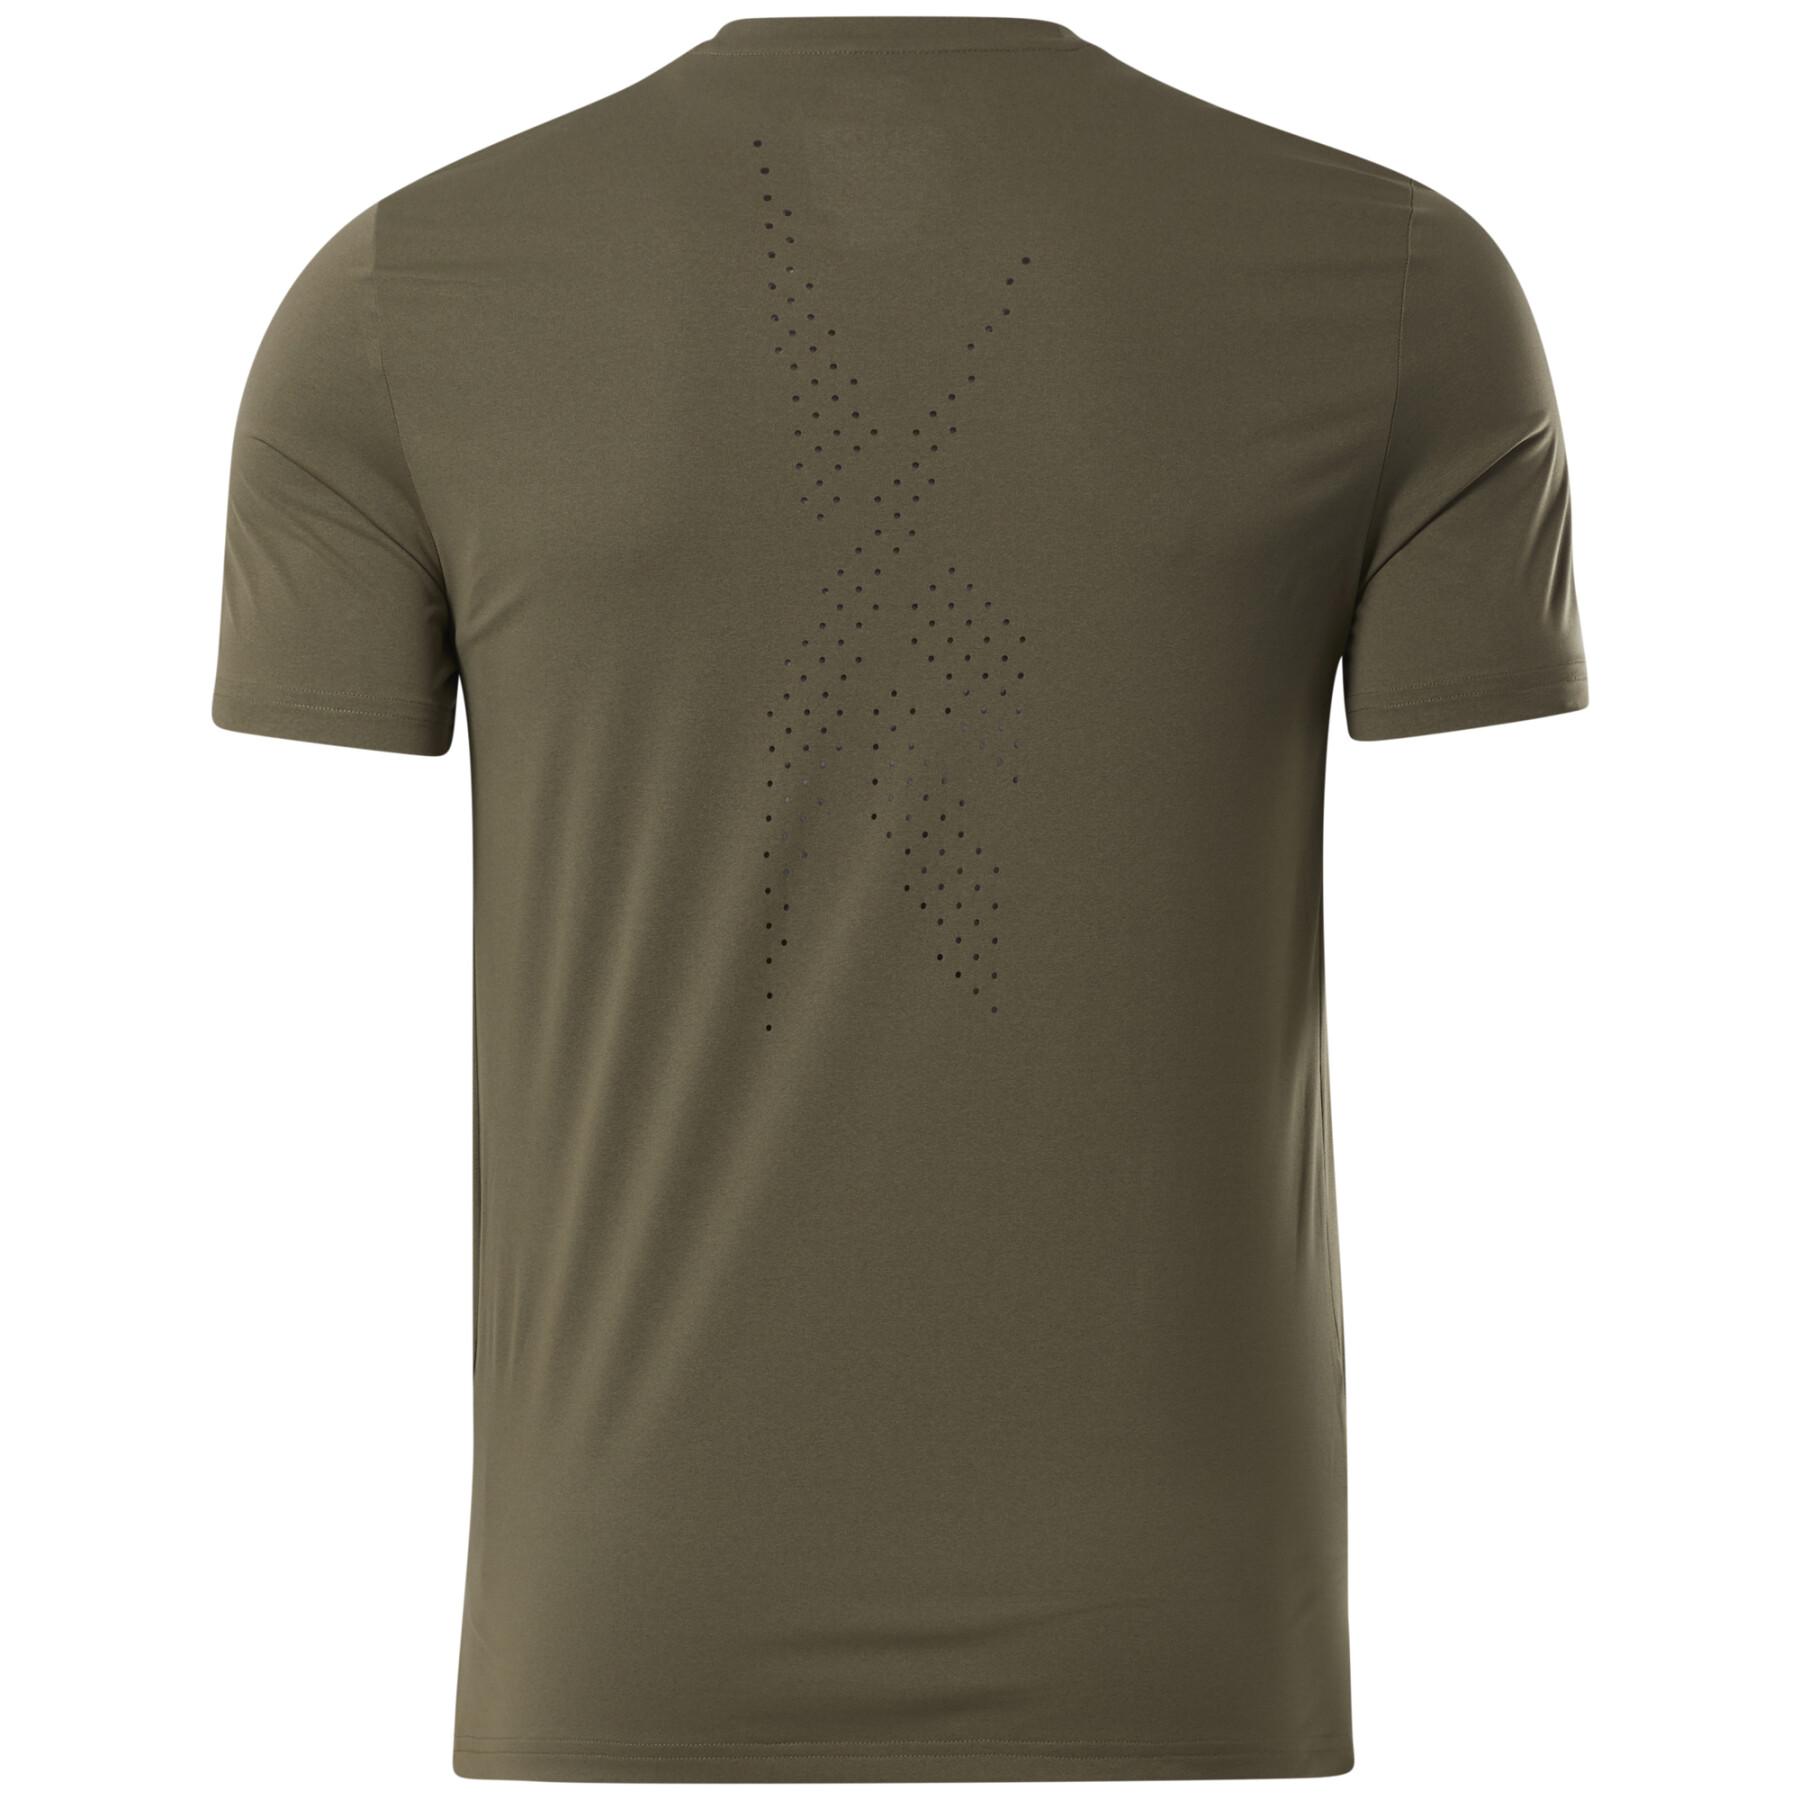 T-shirt Reebok Ubf Perforated Short Sleeve